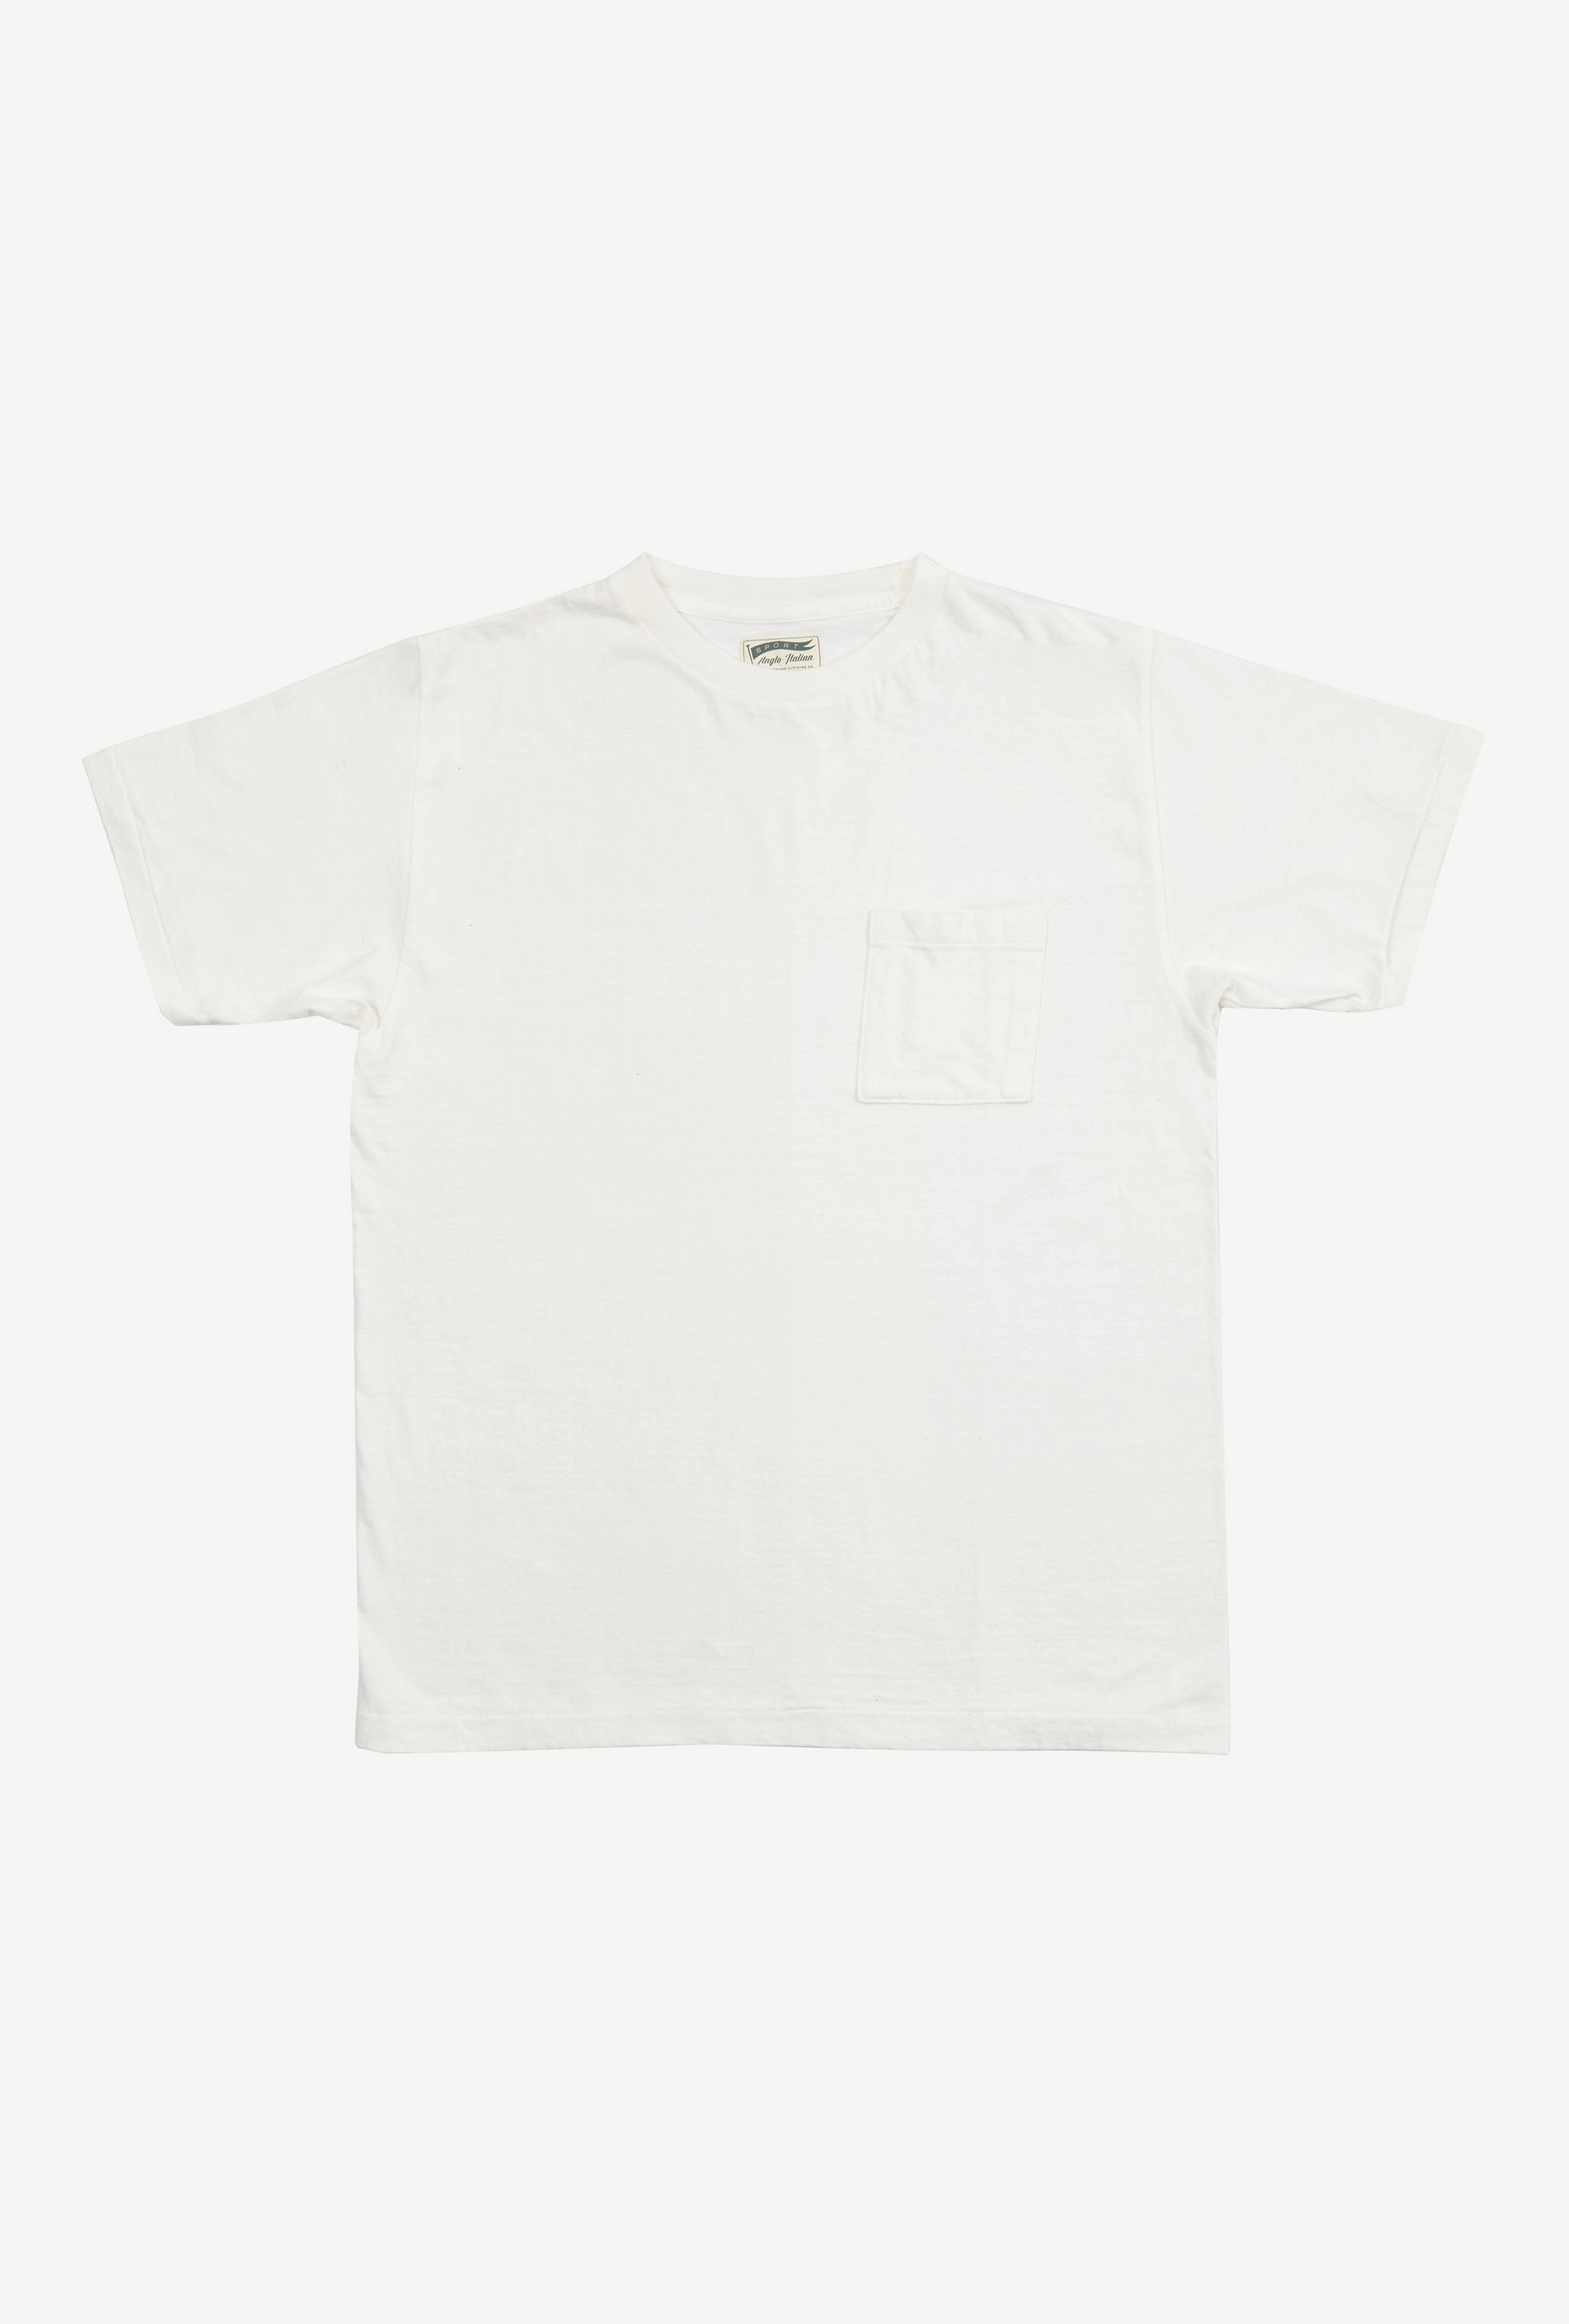 Cotton Pocket T-Shirt White